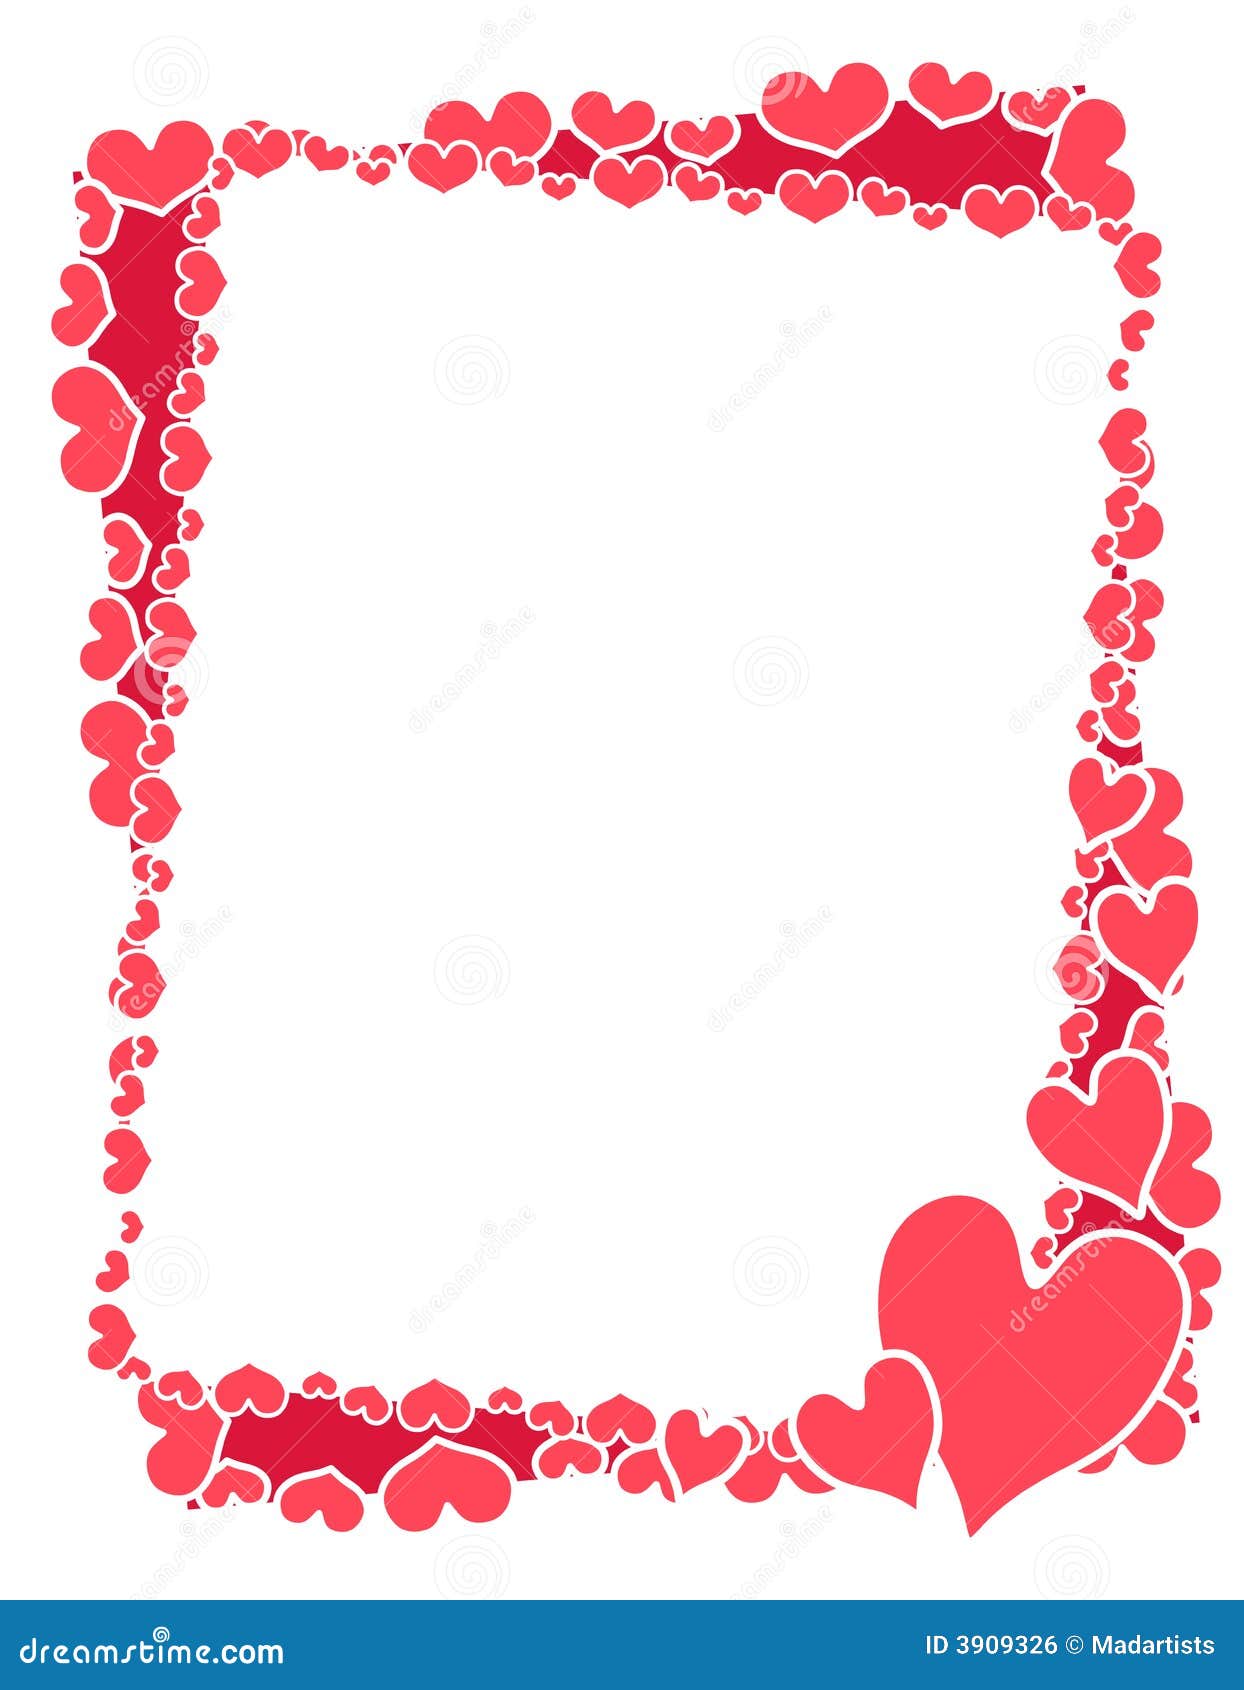 Pink Valentine Hearts Frame Or Border Royalty Free Stock Image Image